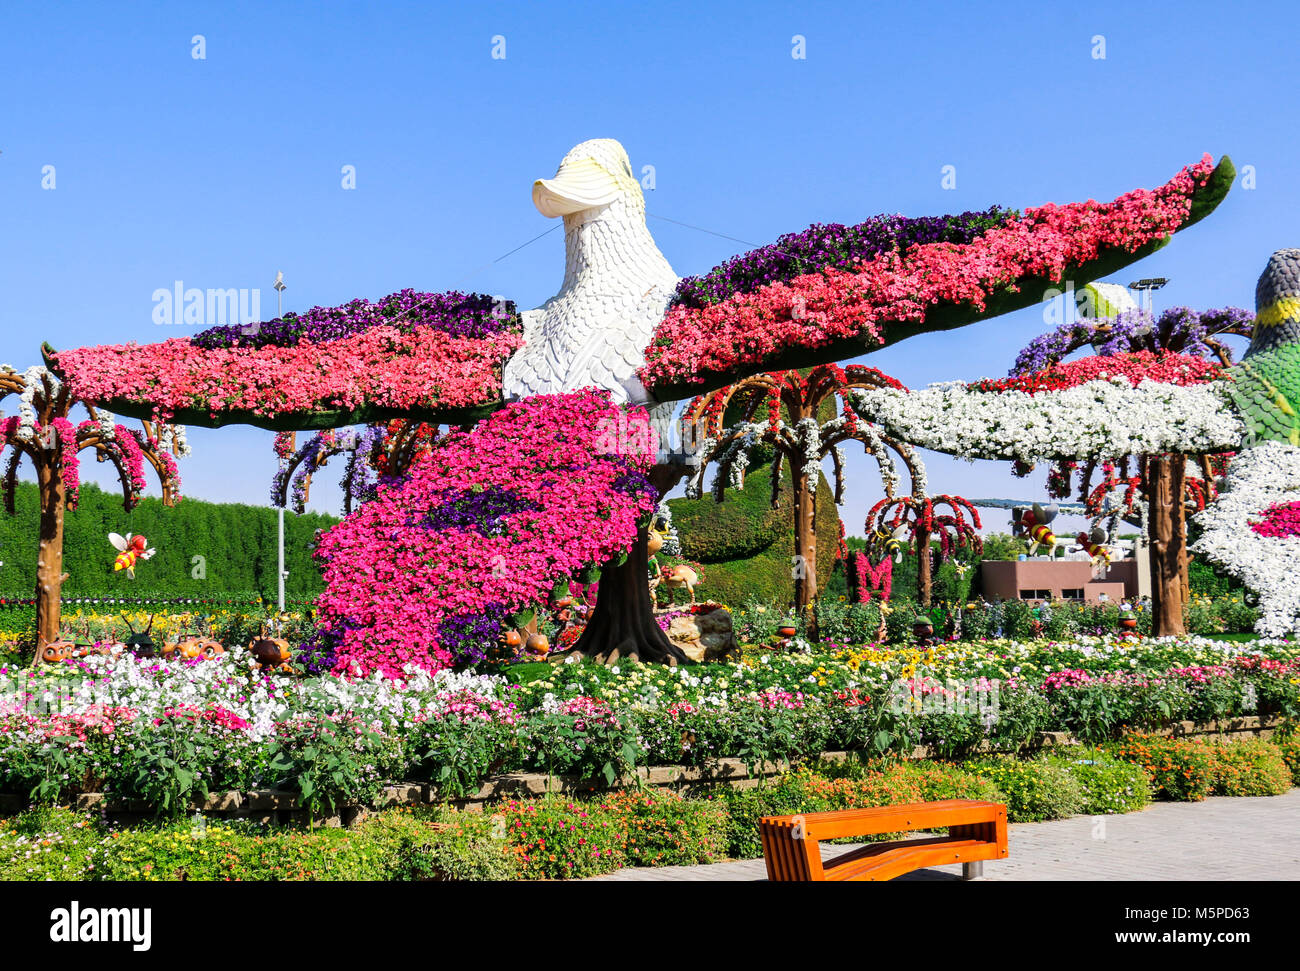 Dubai, United Arab Emirates - 01/23/2019 - Beautiful Flourish Landscape of Miracle Garden with over 45 million flowers in a sunny day, Flower Garden i Stock Photo